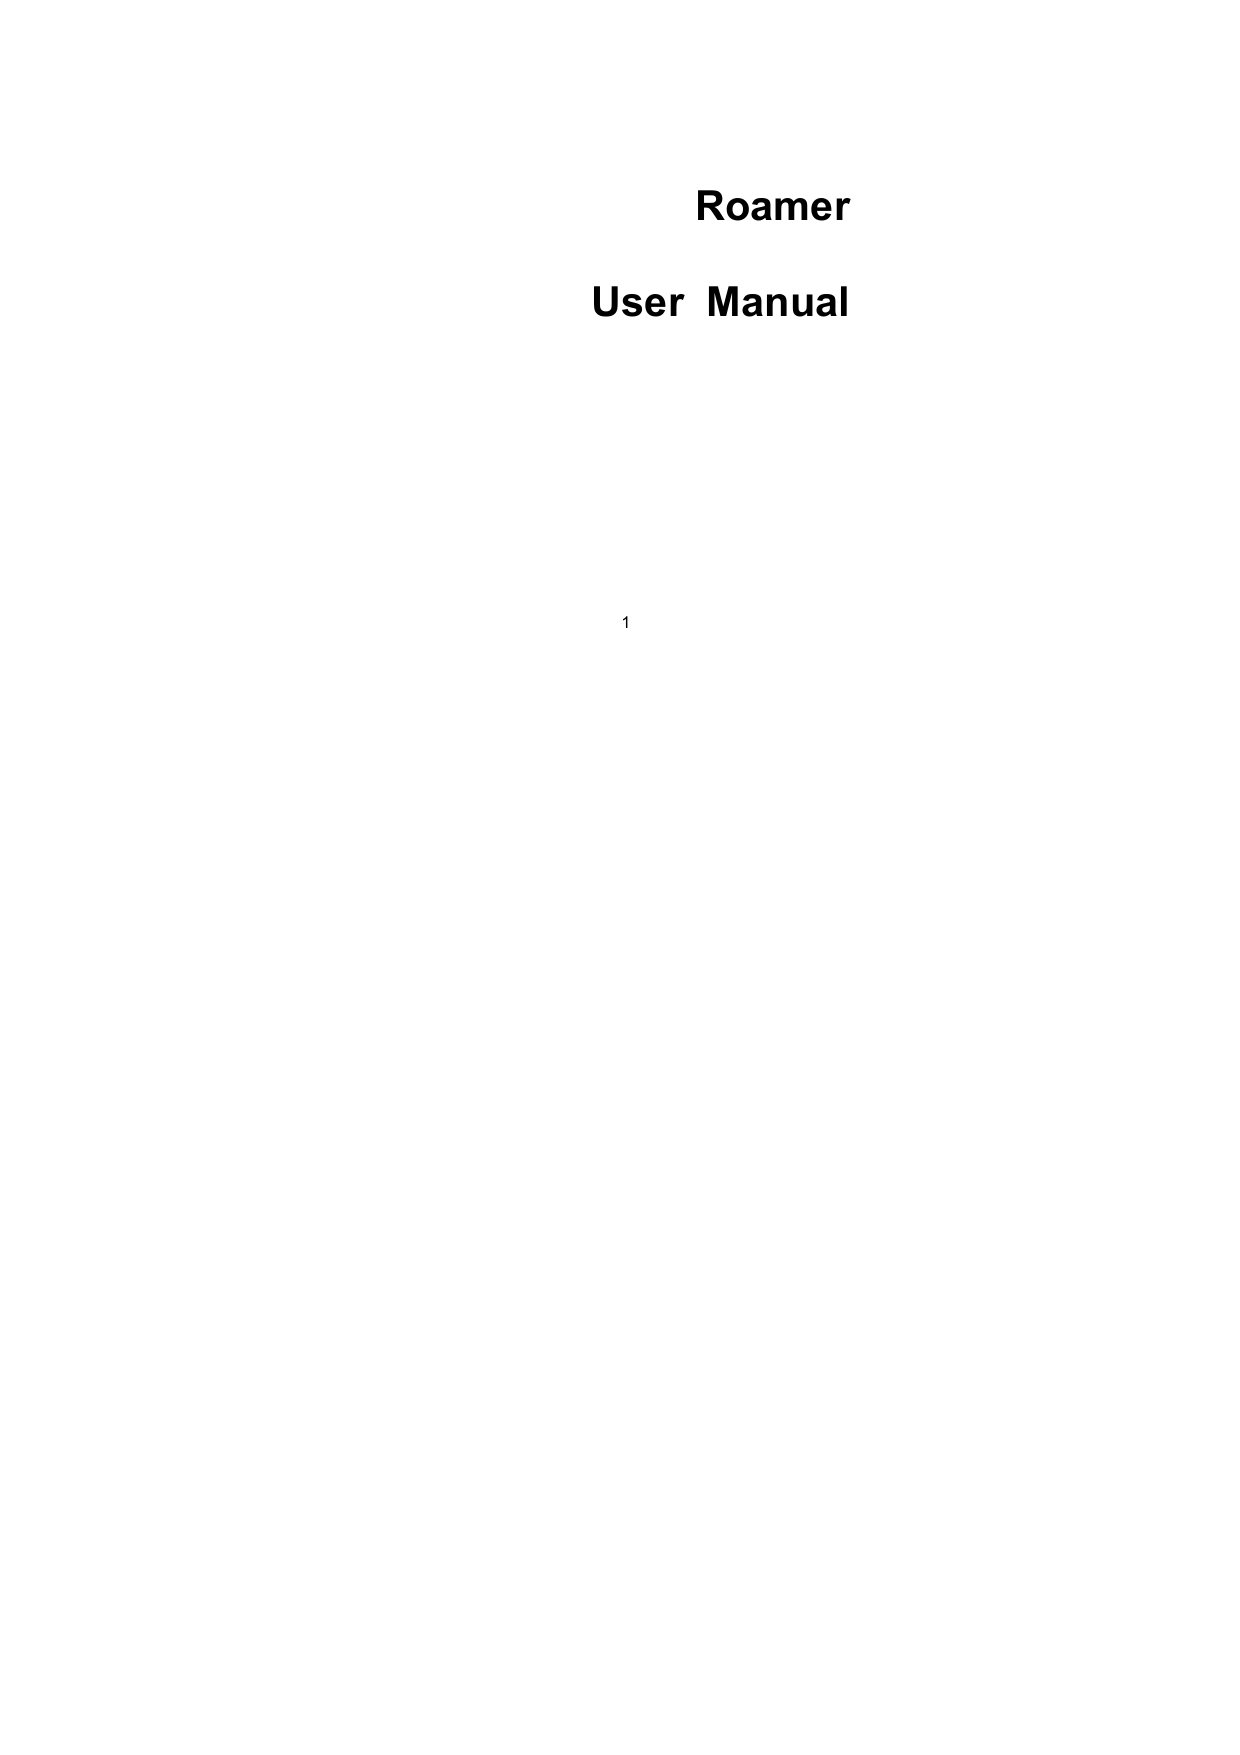 1    Roamer  User  Manual  